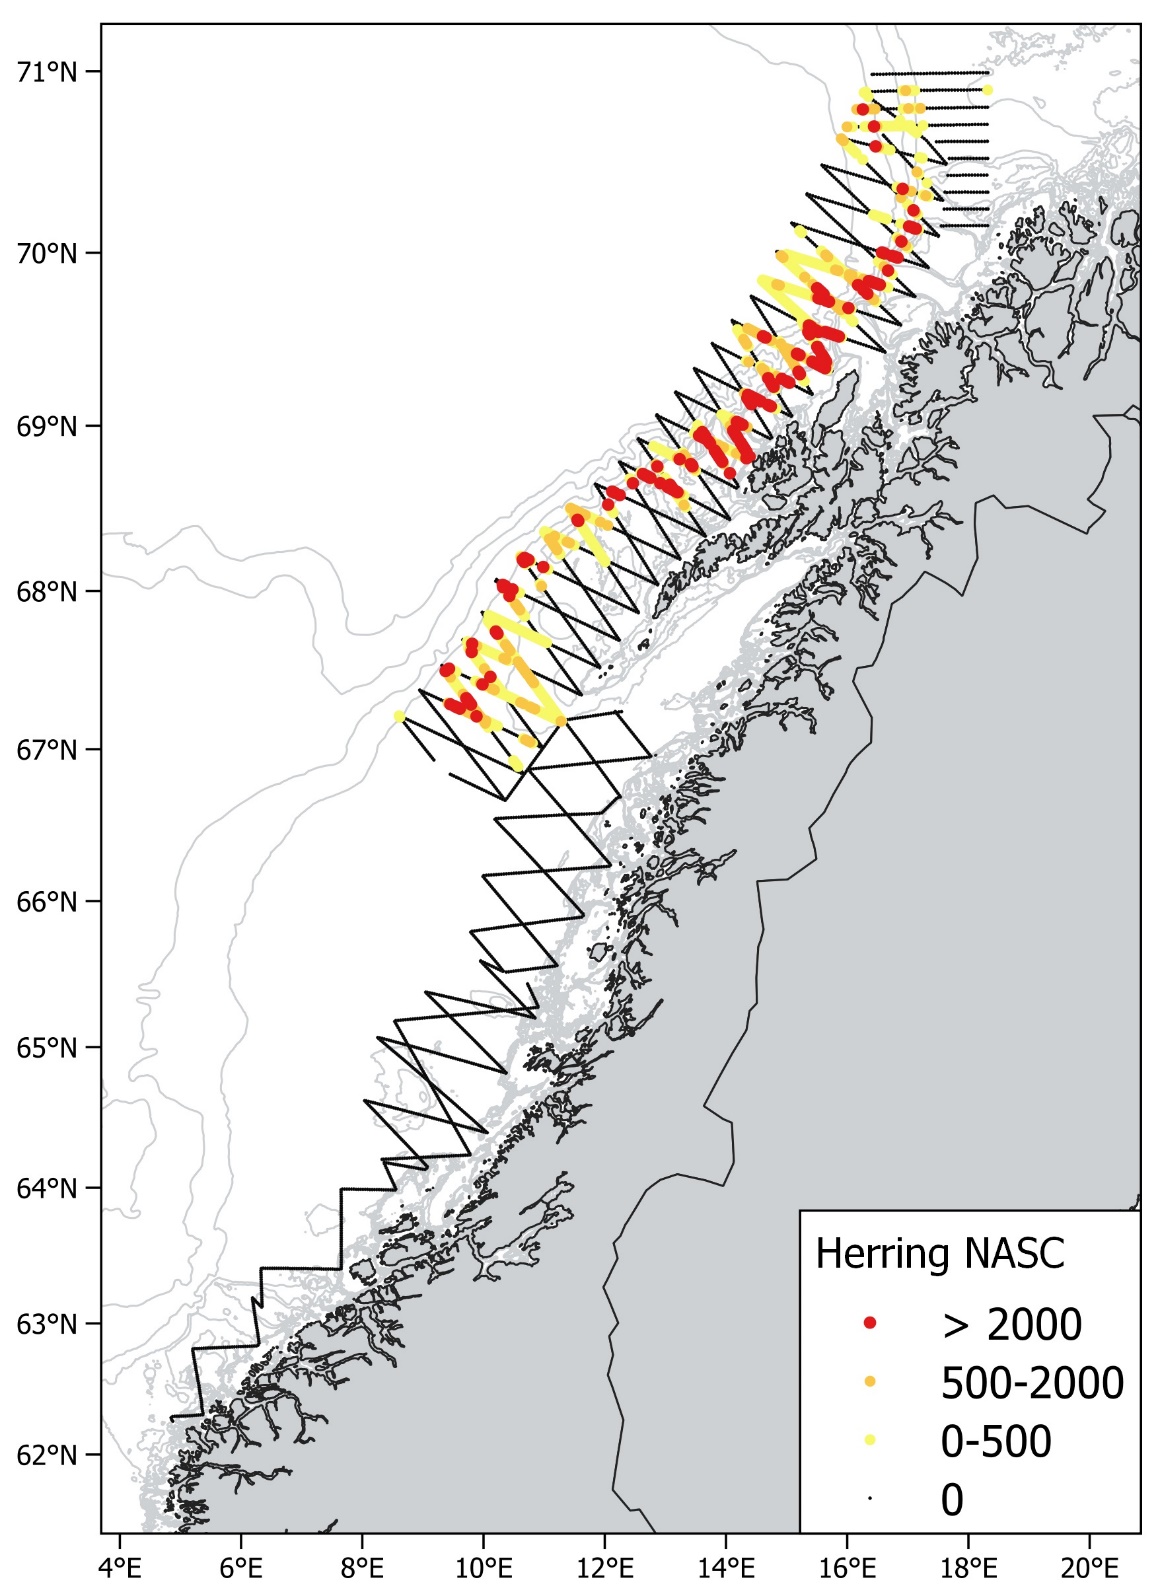 Distribution and abundance of Norwegian springspawning herring during